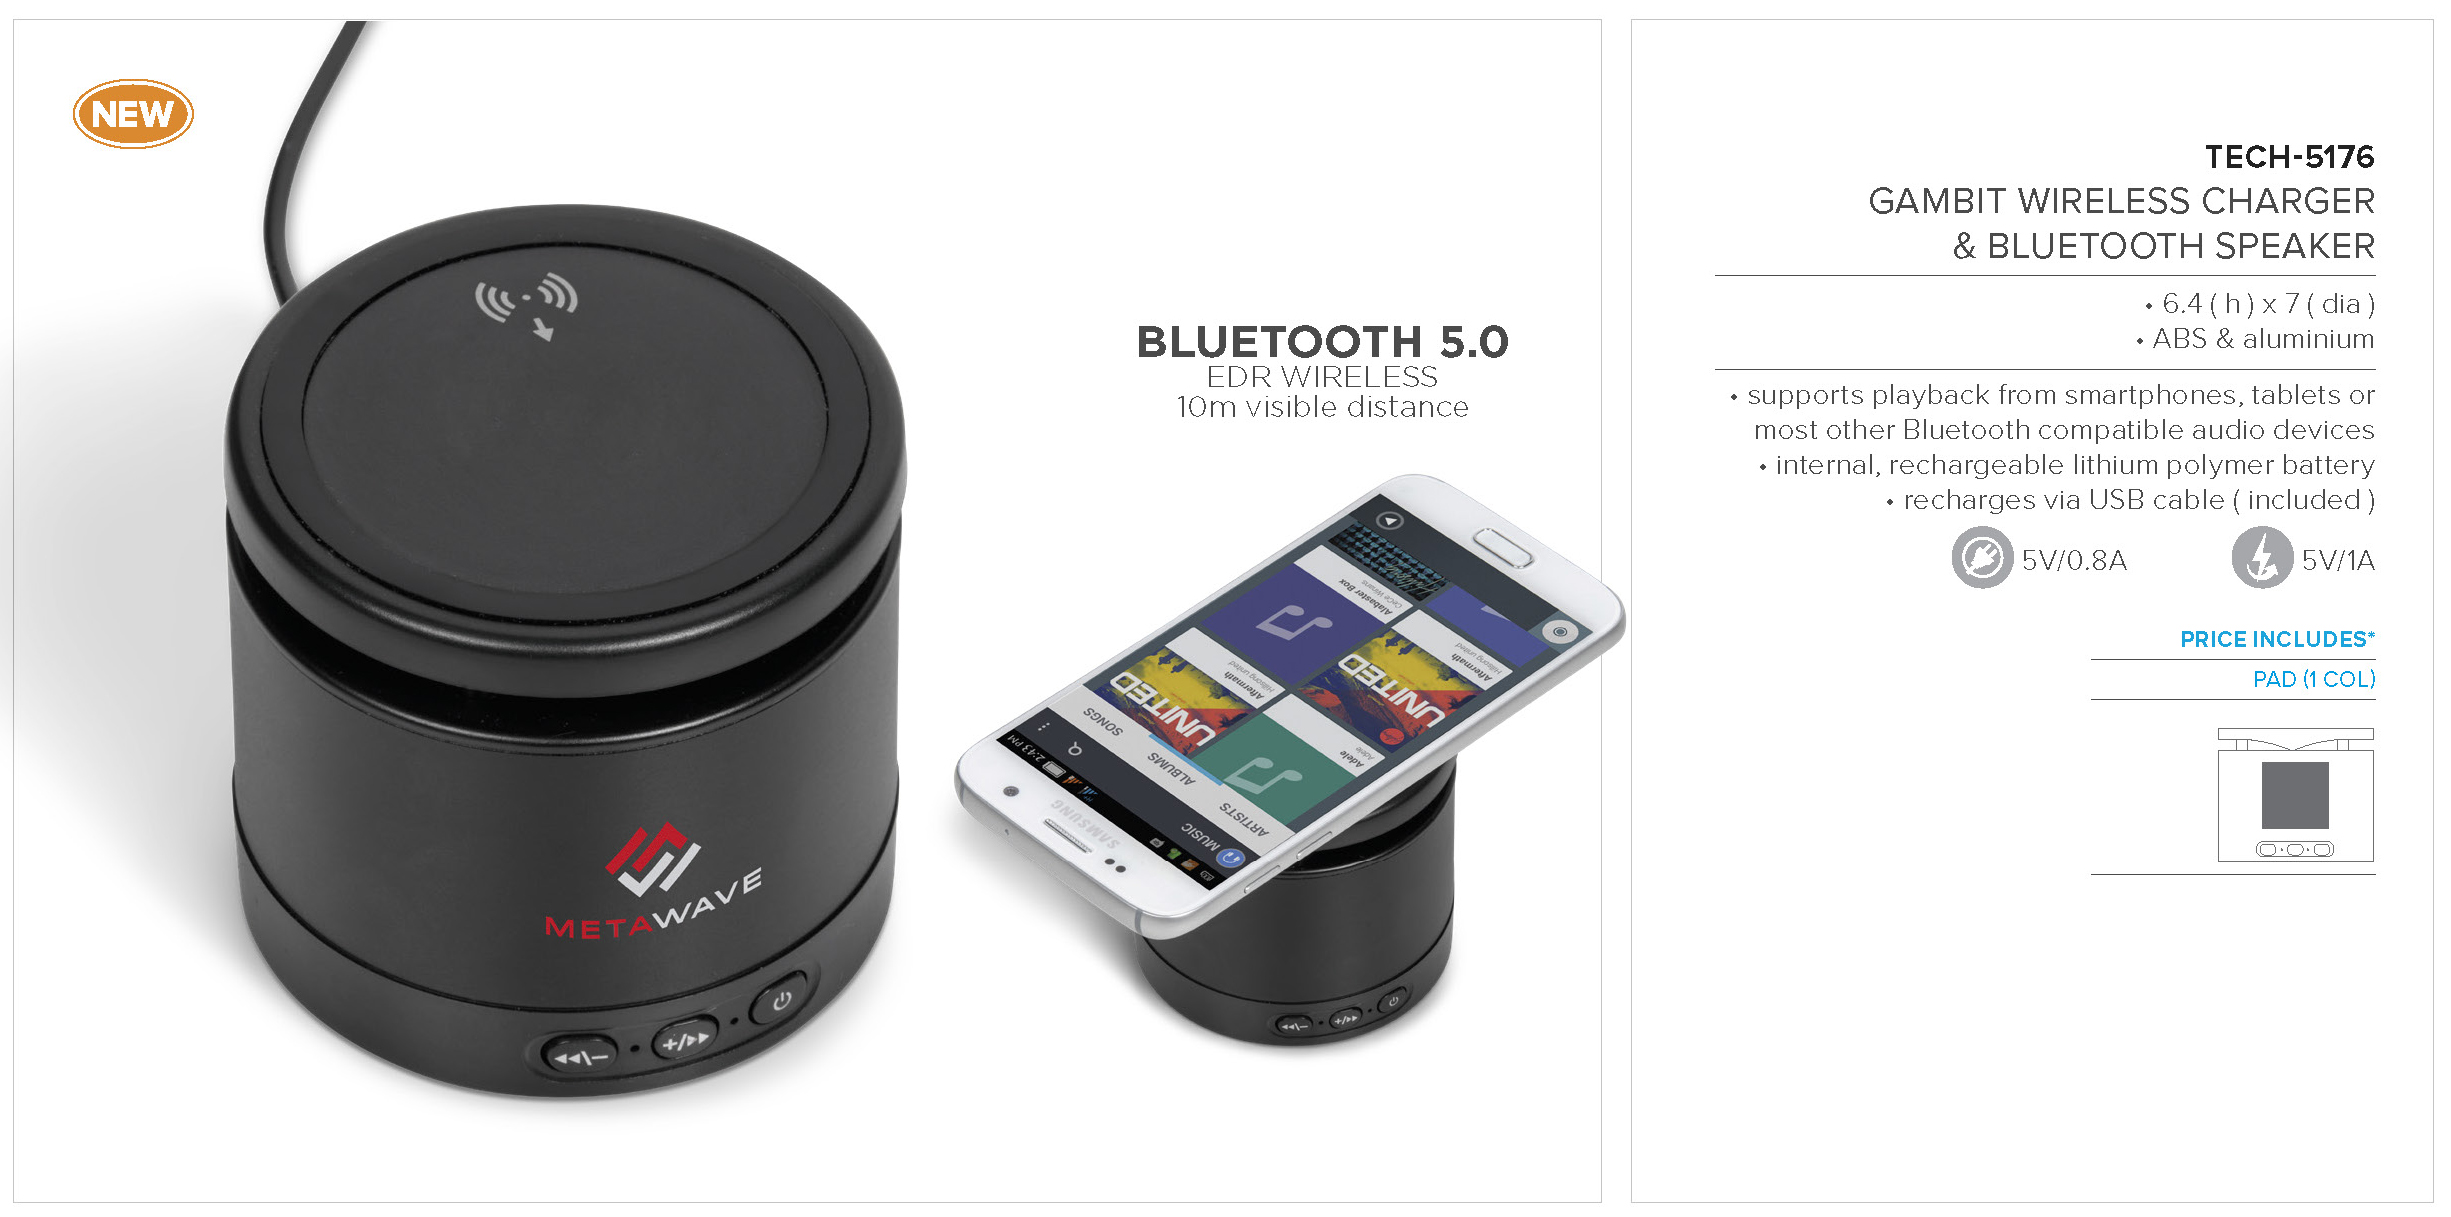 TECH-5176 - Gambit Wireless Charger & Bluetooth Speaker - Catalogue Image